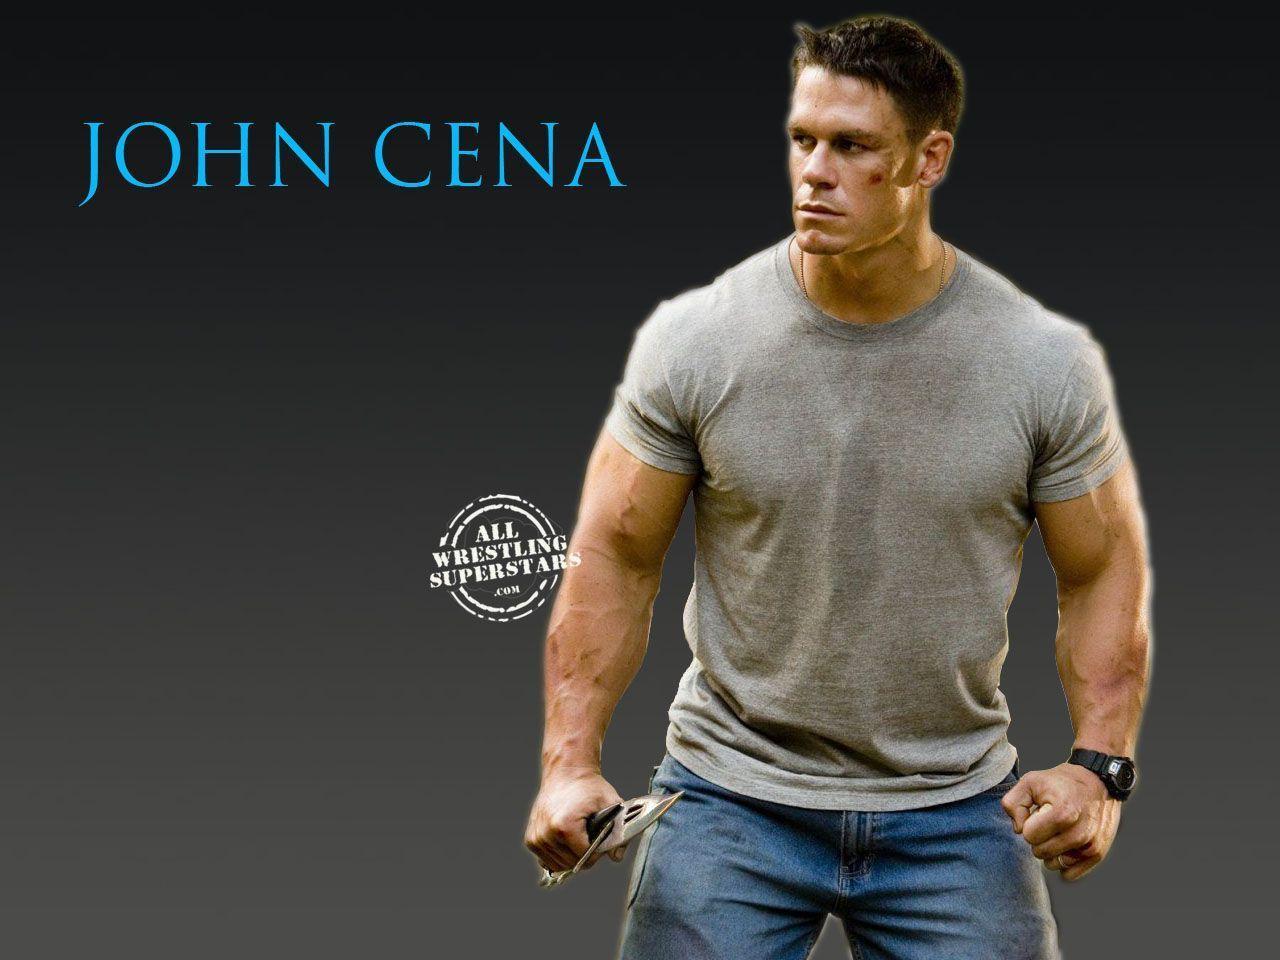 Swank John Cena Wallpaper 1280x960PX Awesome Wwe John Cena HD